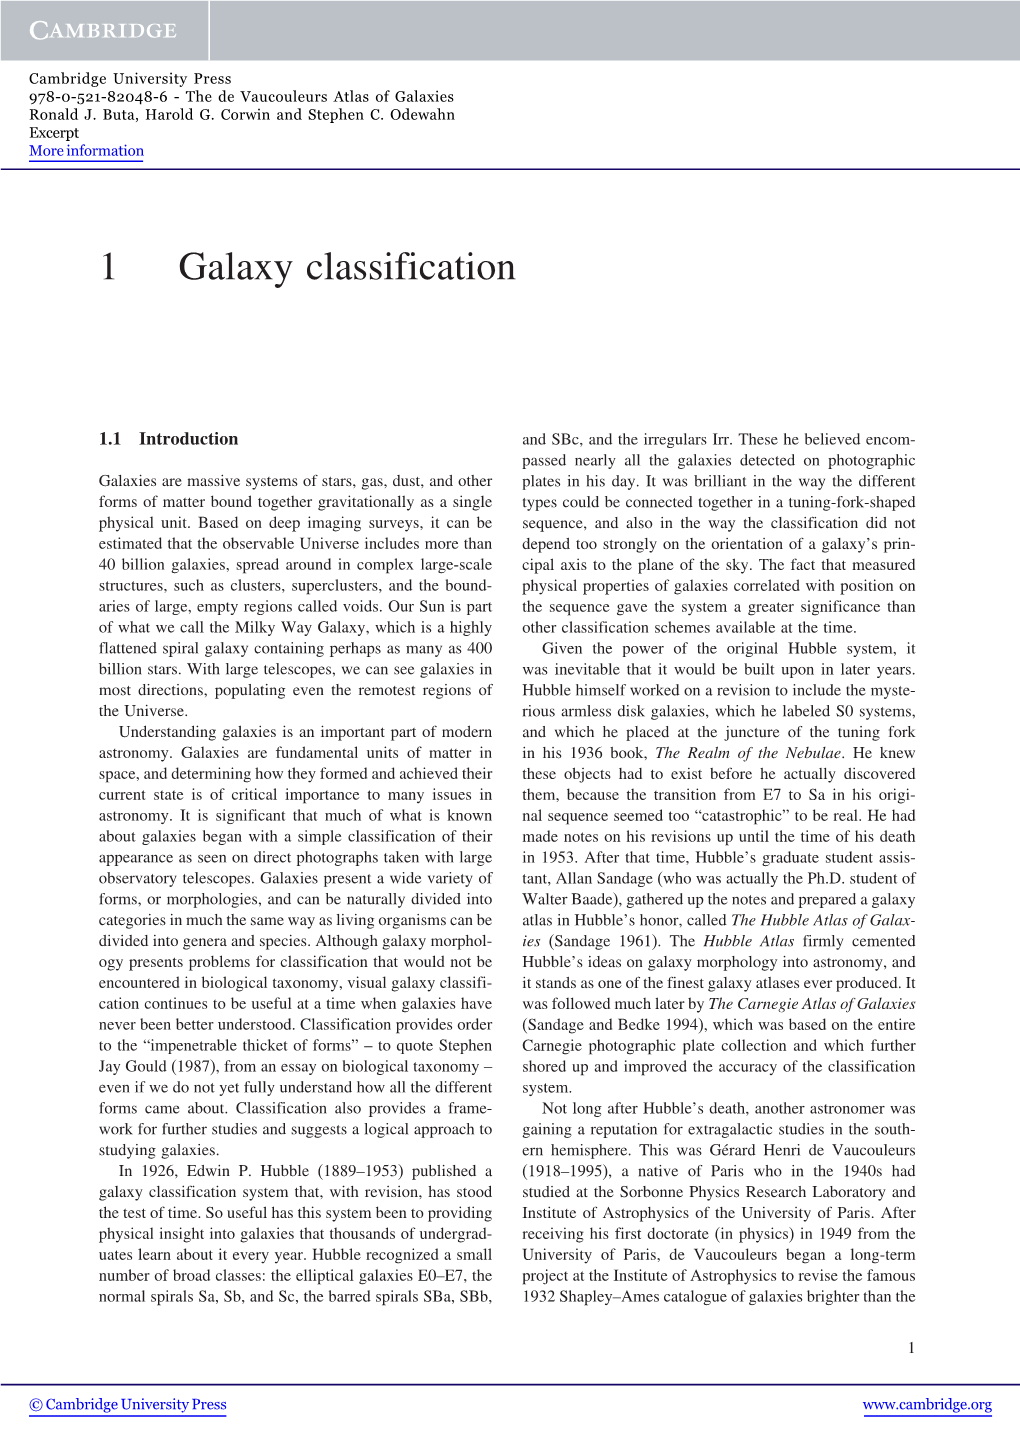 1 Galaxy Classification